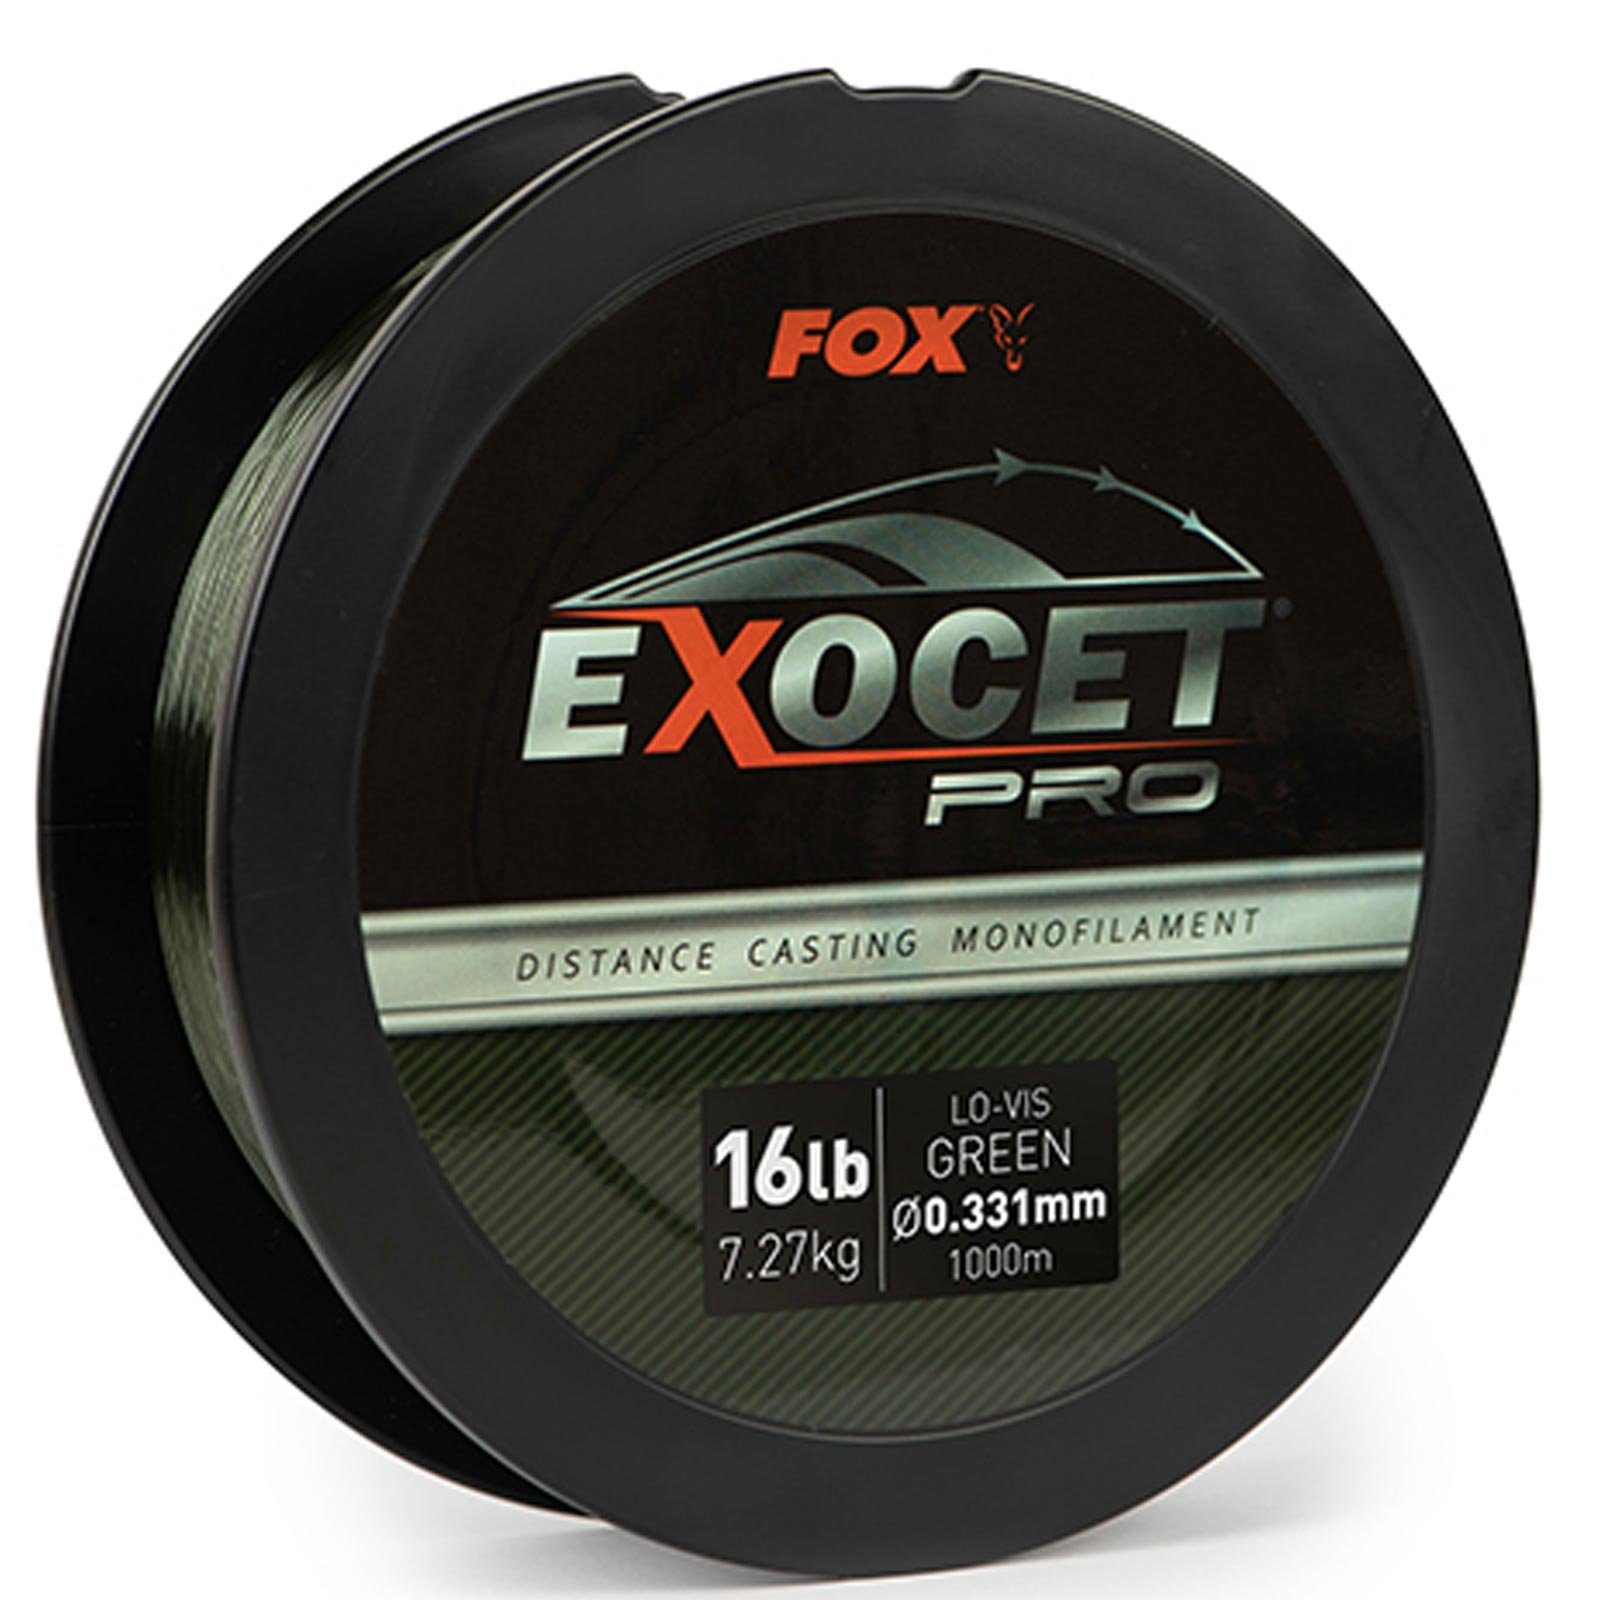 Fox Angelschnur, 1000 m Länge, Lo-Vis 7.27kgs Pro Monofilament 16lbs Green Exocet Angelschnur 0.331mm / (1000m)Monofile Fox